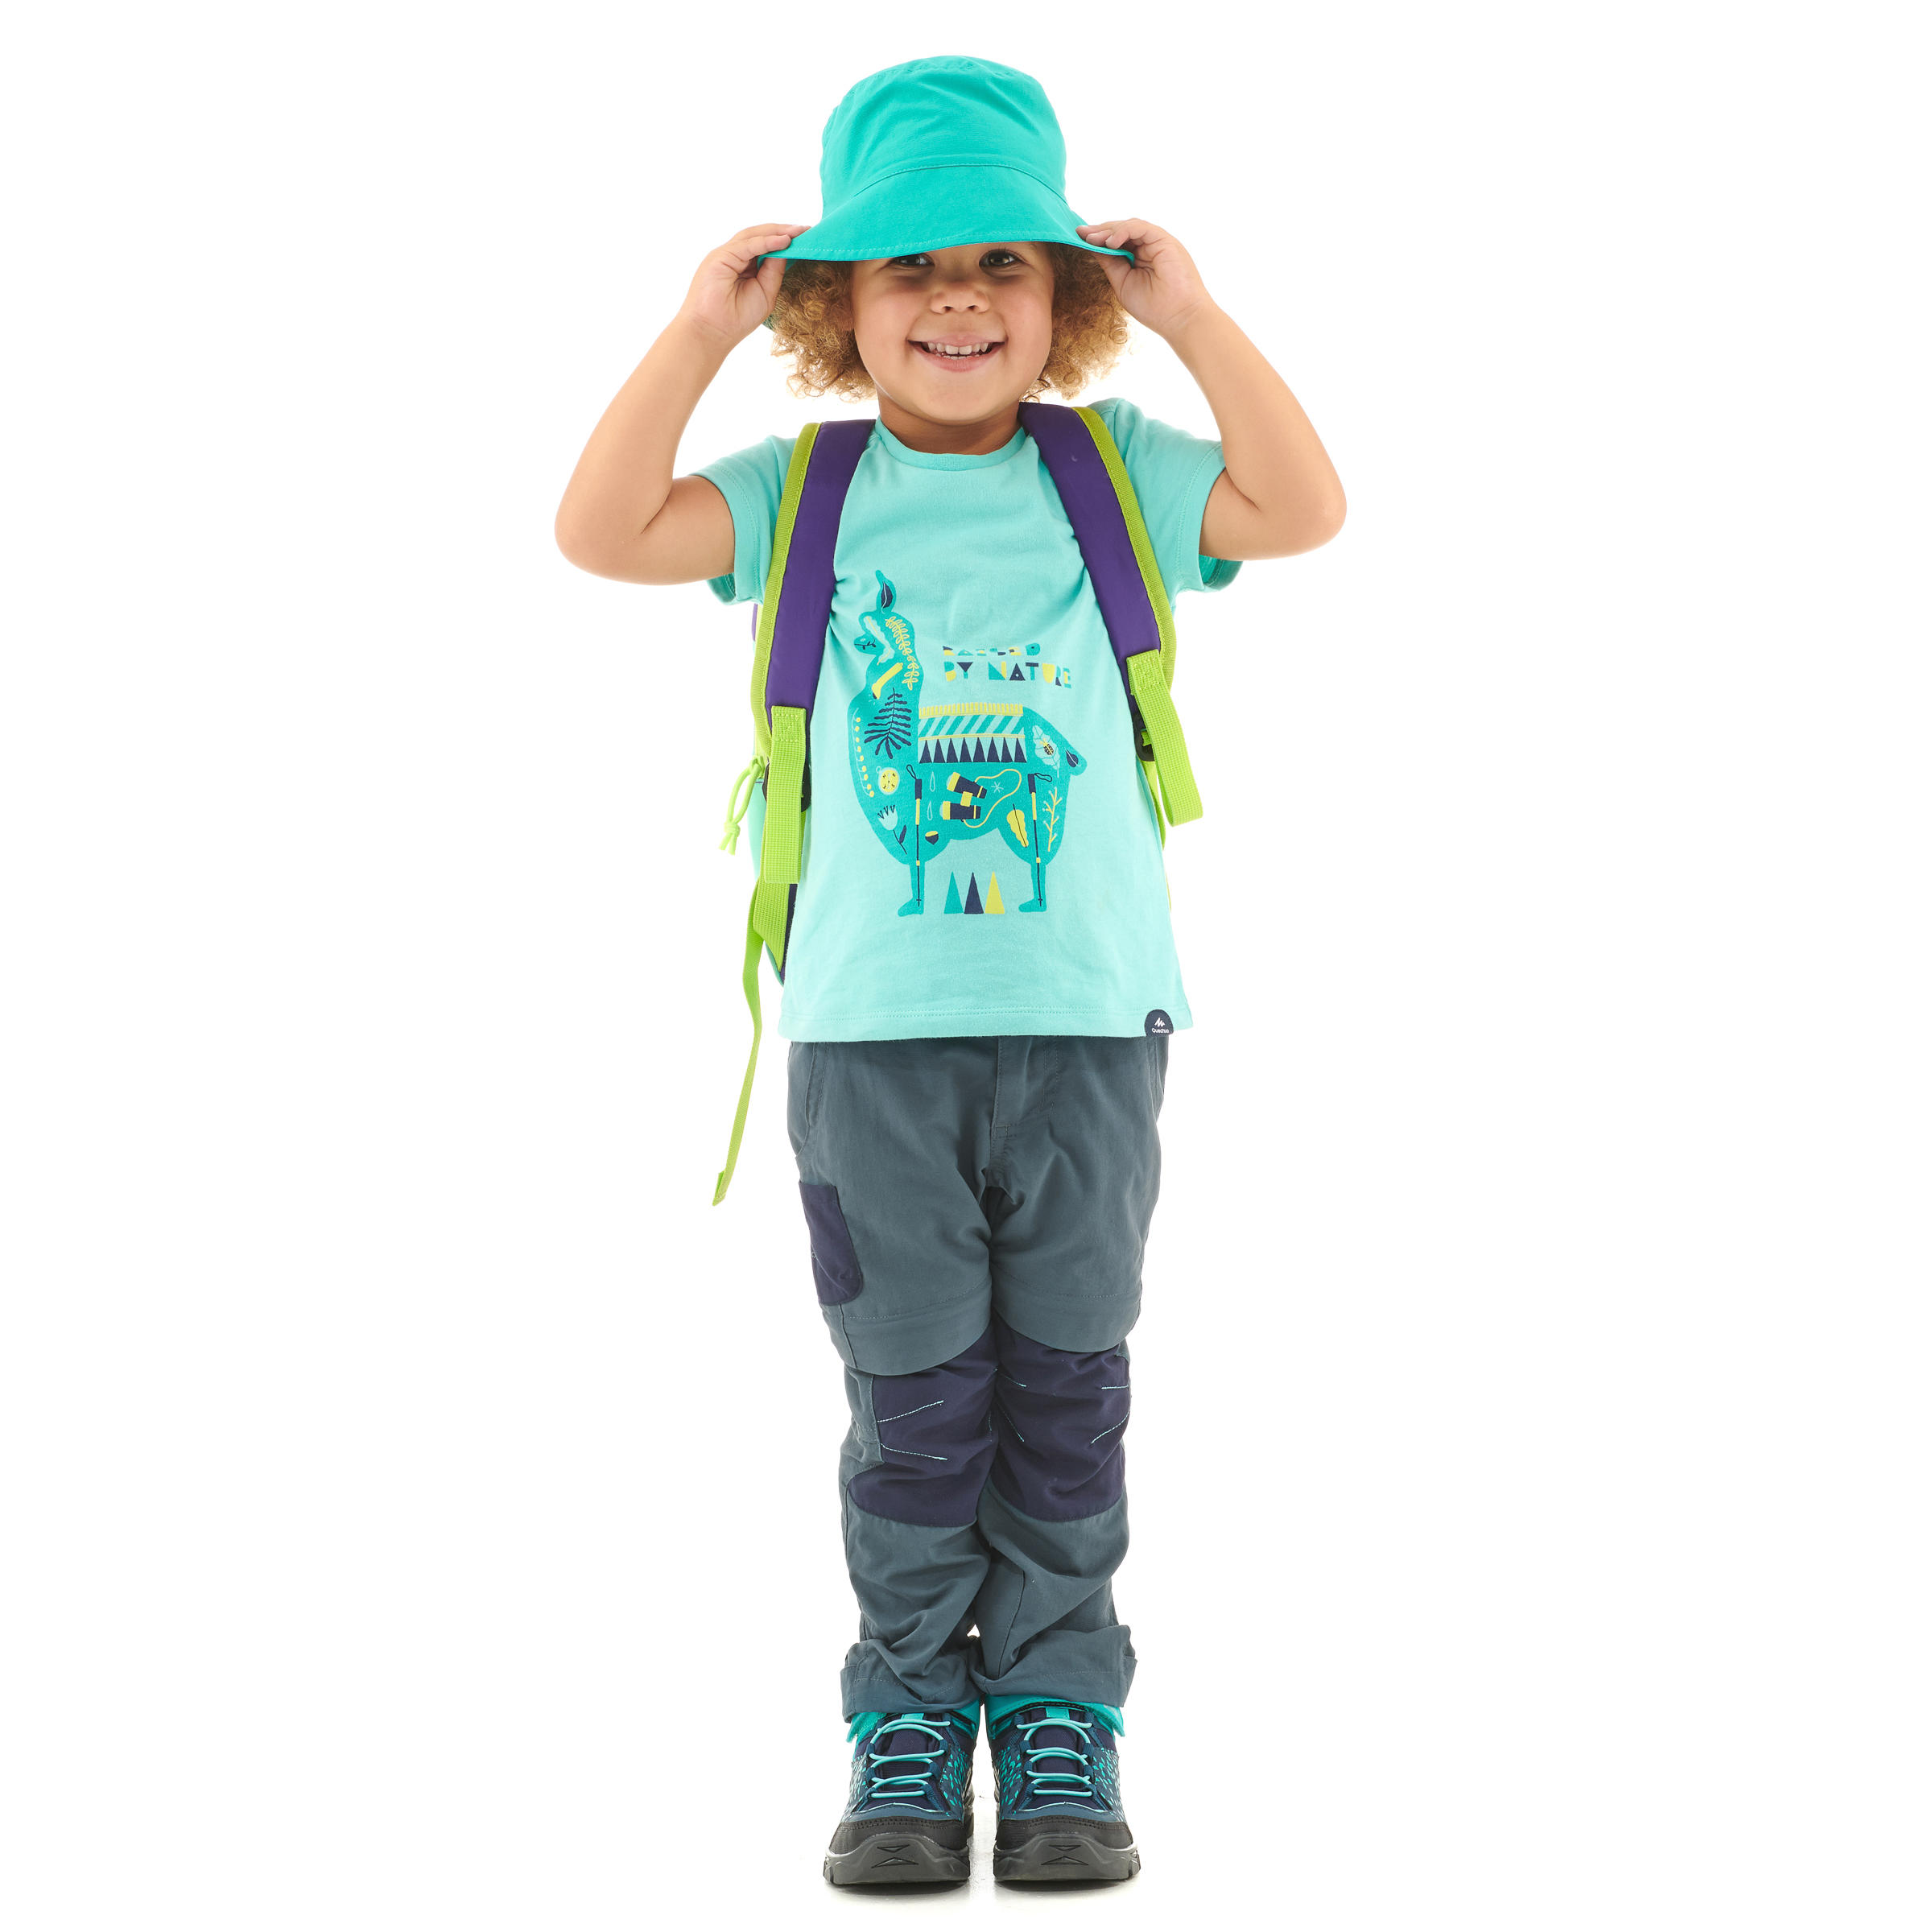 Kids’ Convertible Hiking Pants - MH 500 Grey/Blue - QUECHUA